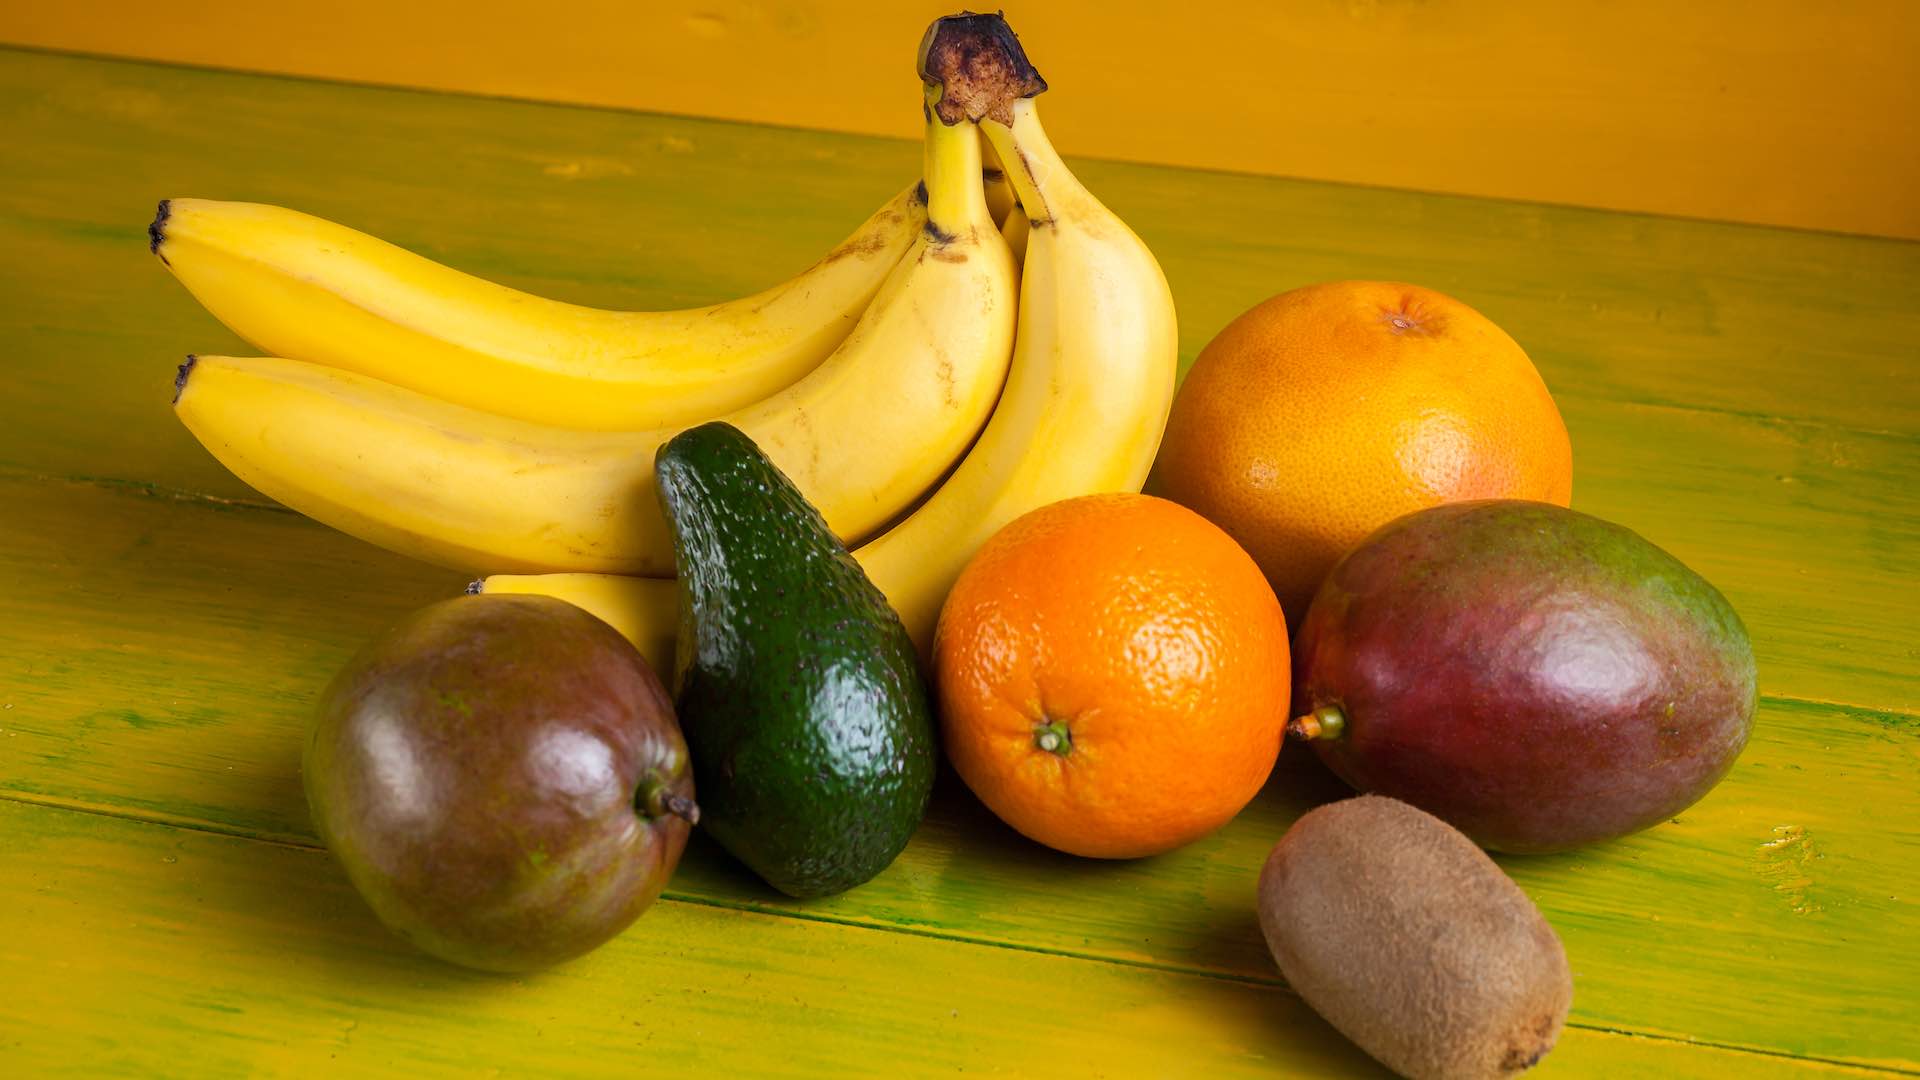 Busting myths about fruit consumption for diabetics